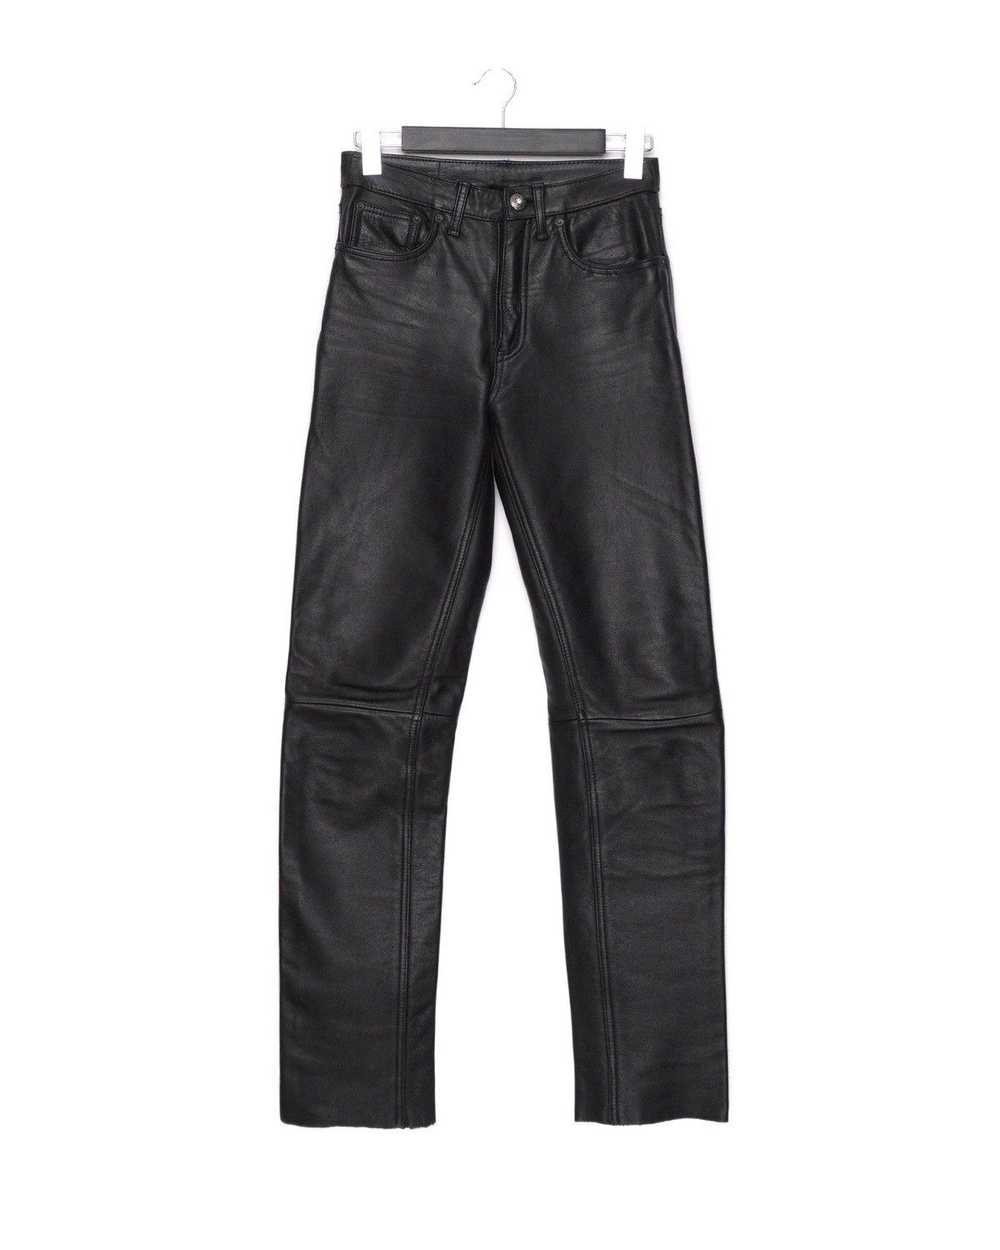 Levi's Vintage Levi’s Genuine Leather Black Pants - image 1